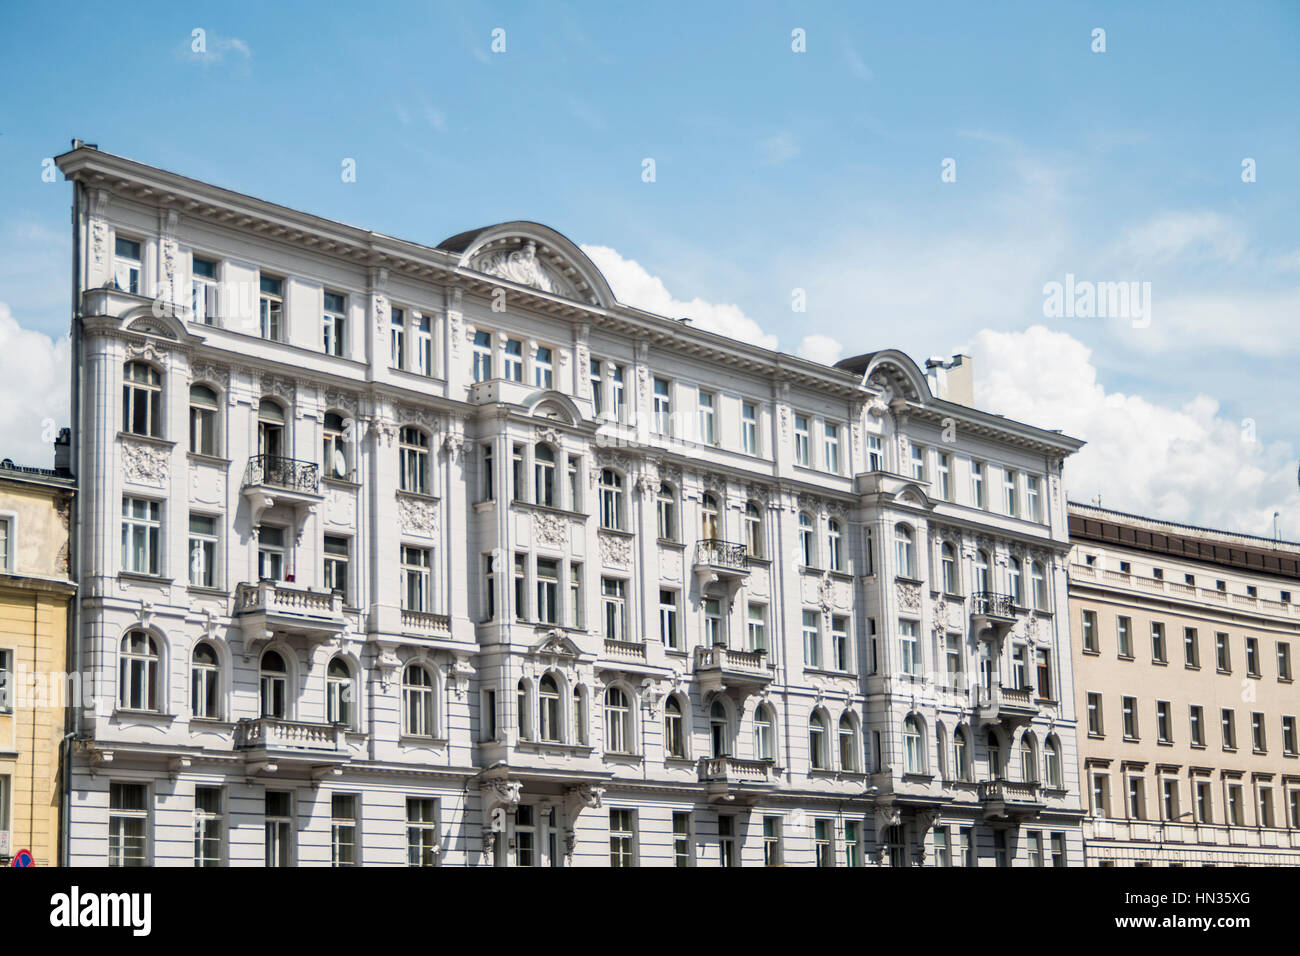 Poland warsaw similar flatiron building white facade classic culture design Stock Photo